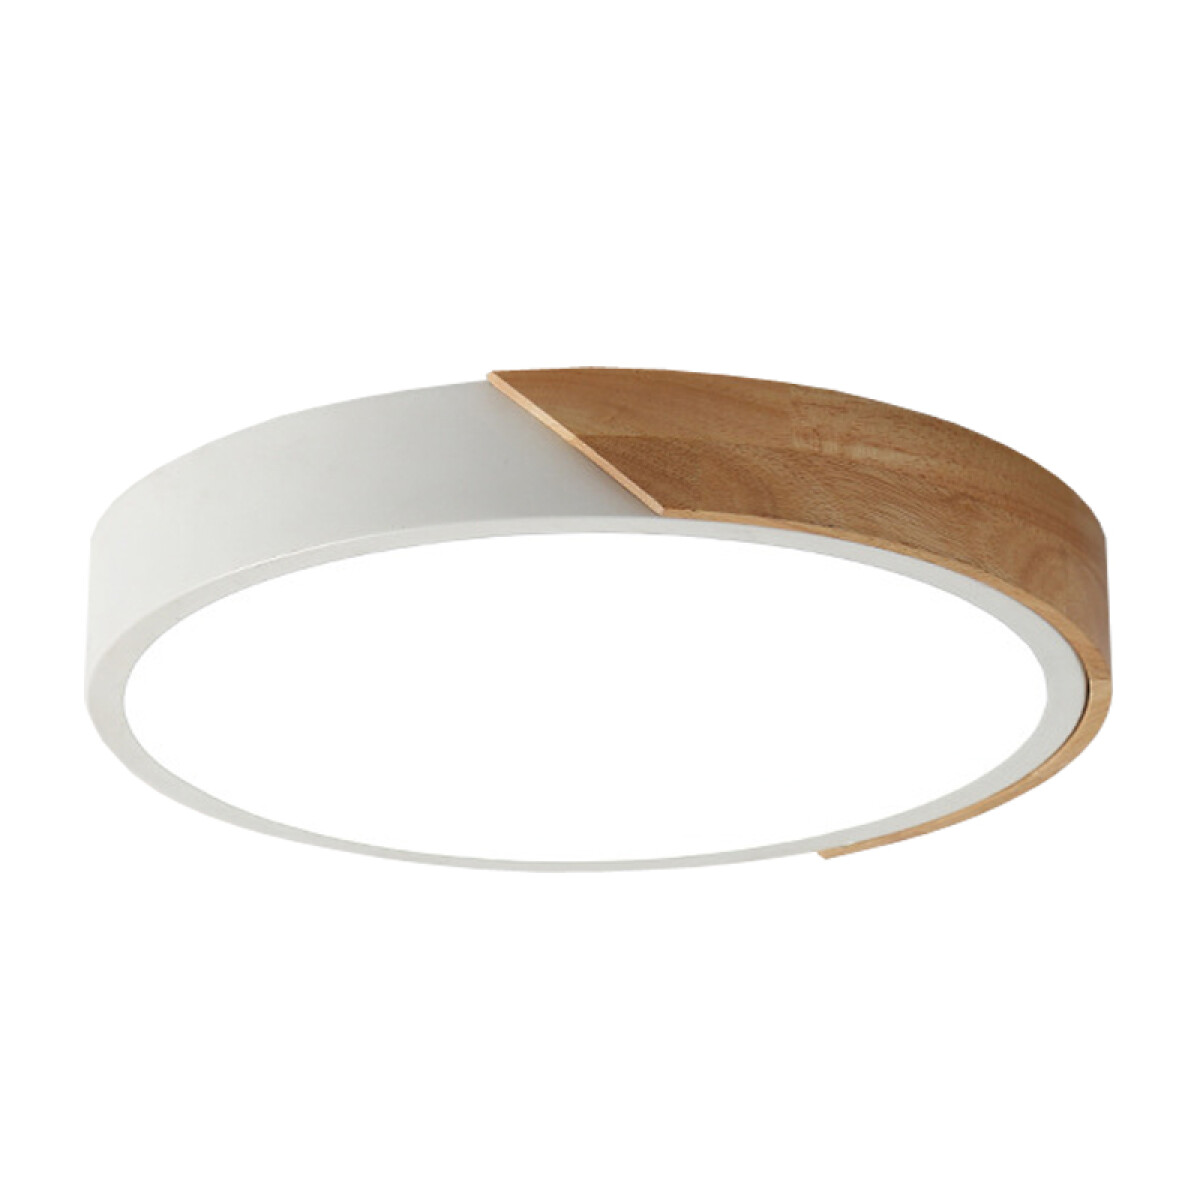 Plafón led de diseño circular en madera y aluminio blanco mate 20w - Luz cálida 